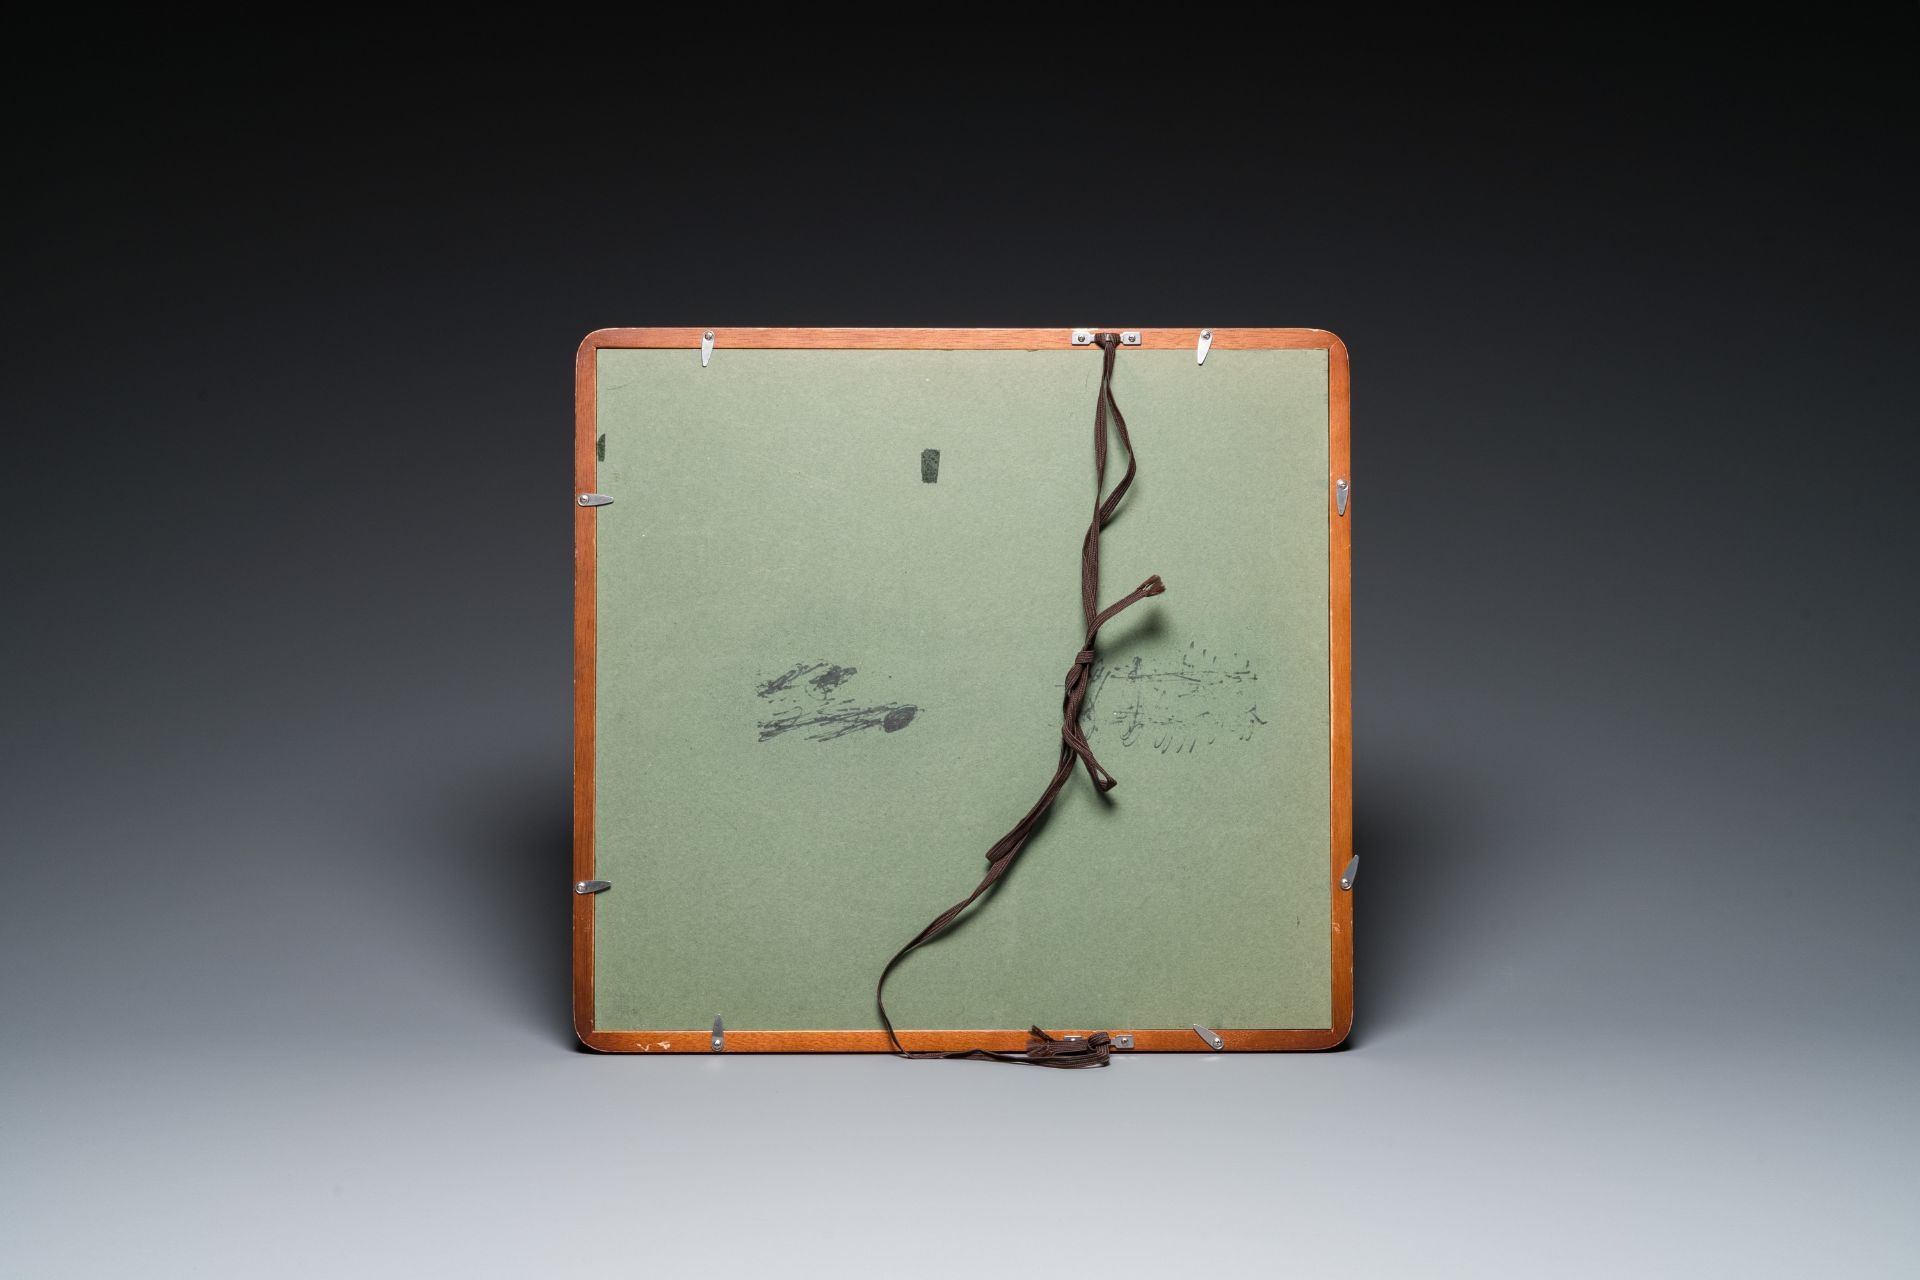 Lou Shibai å©å¸«ç™½ (1918-2010): 'Dragonfly and flowers' and Qi Gong å•ŸåŠŸ (1912-2005): 'Calligrap - Image 4 of 10